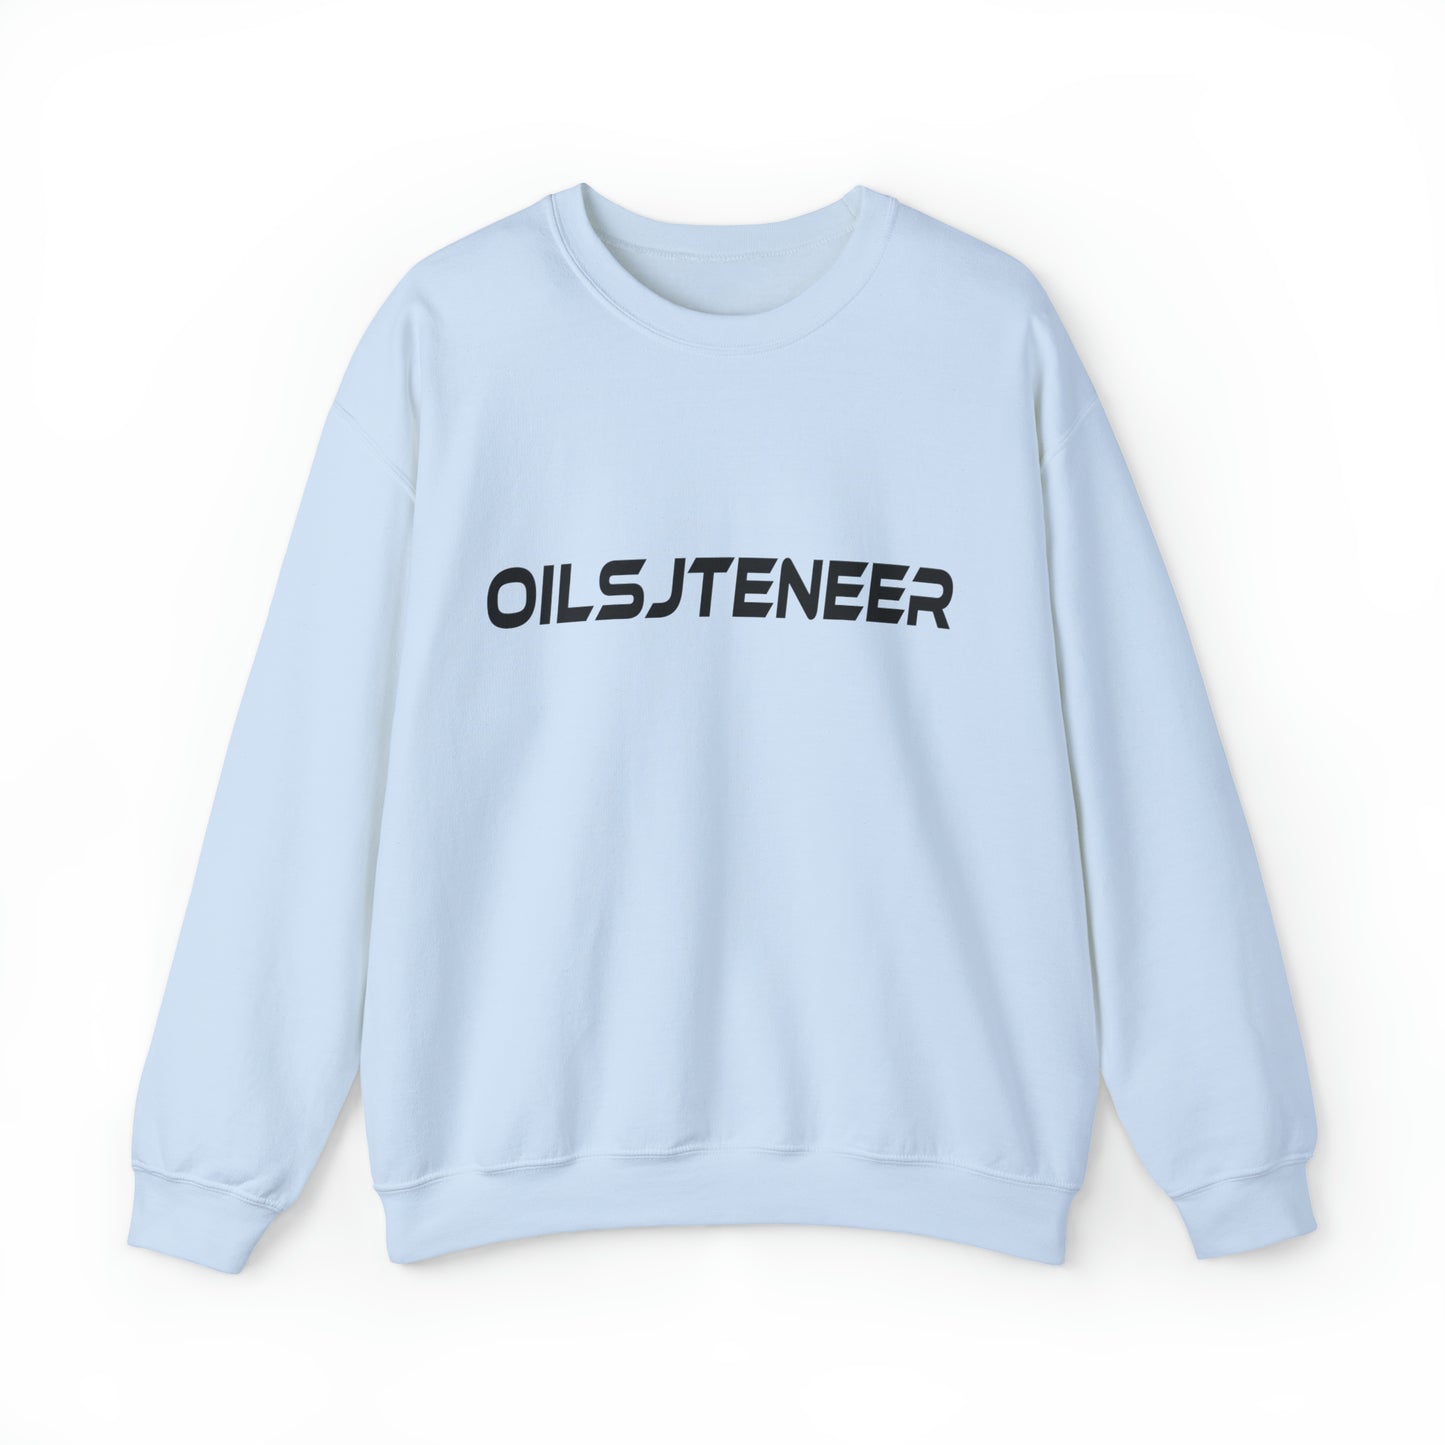 Int Oilsjters - Sweater - Oilsjteneer